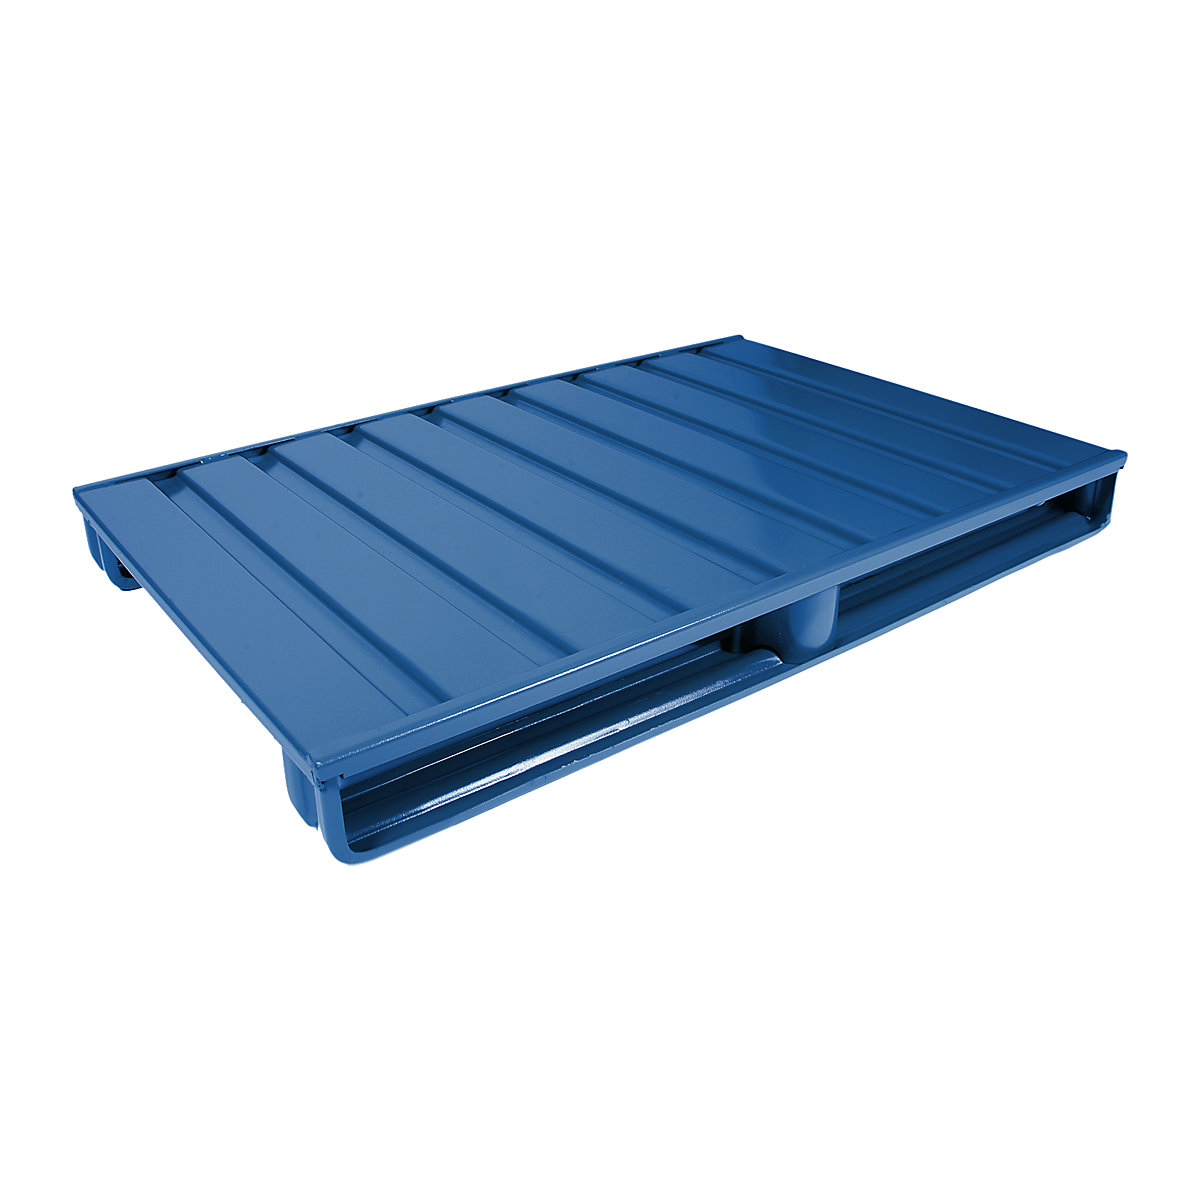 Flat steel pallet – Heson, LxW 1000 x 800 mm, max. load 2000 kg, gentian blue-5